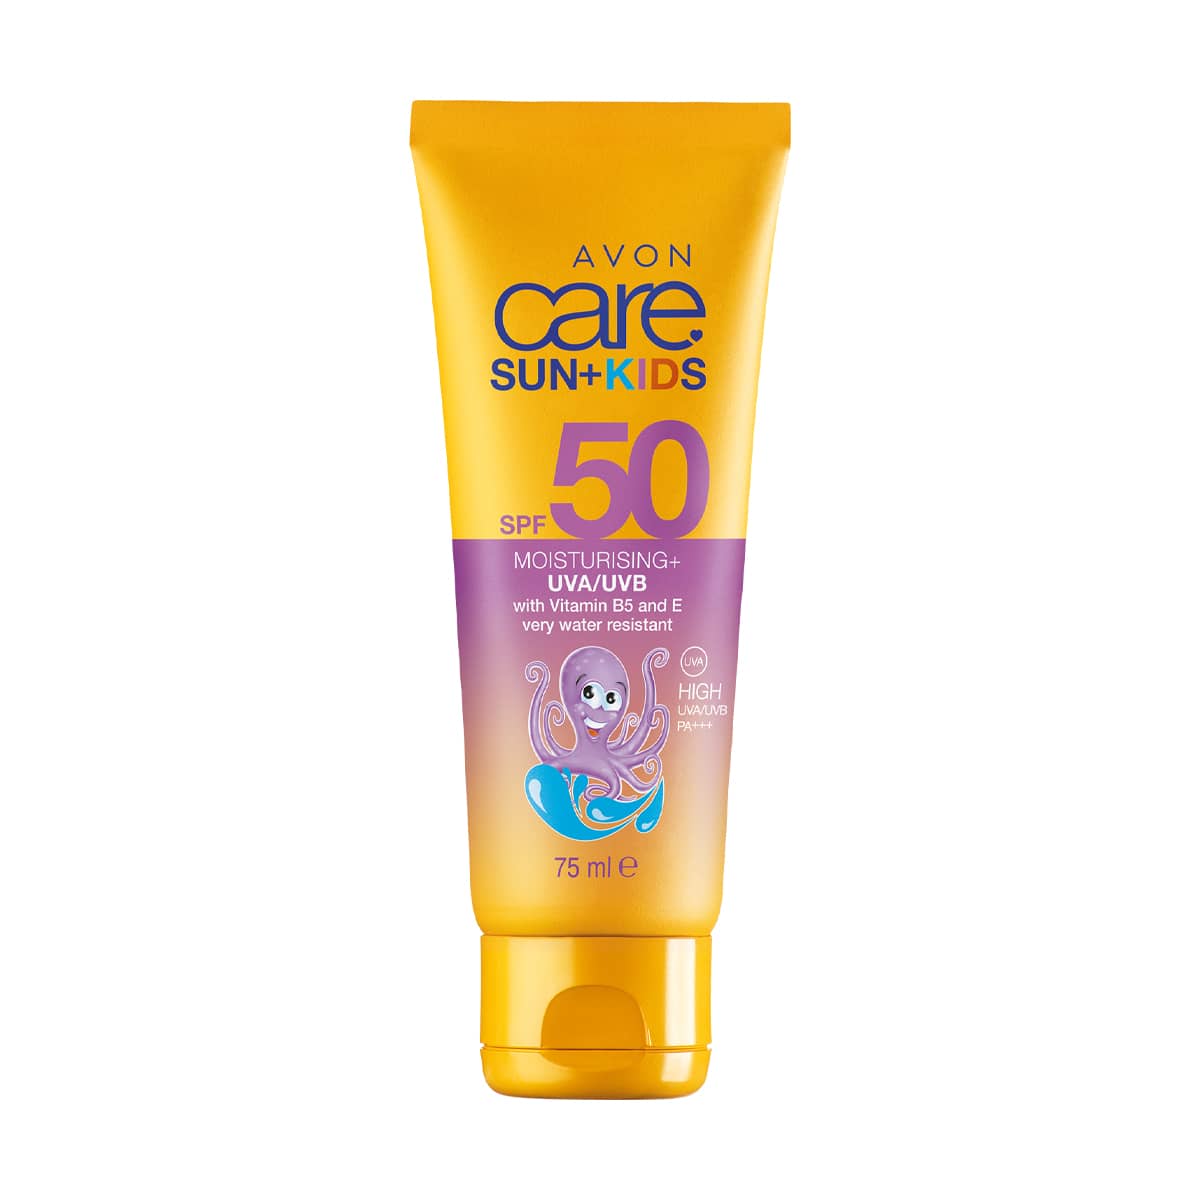 Avon Care SUN+KIDS SPF50 Moisturising High Protection UVA/UVB Water Resistant Sun Cream 75ml